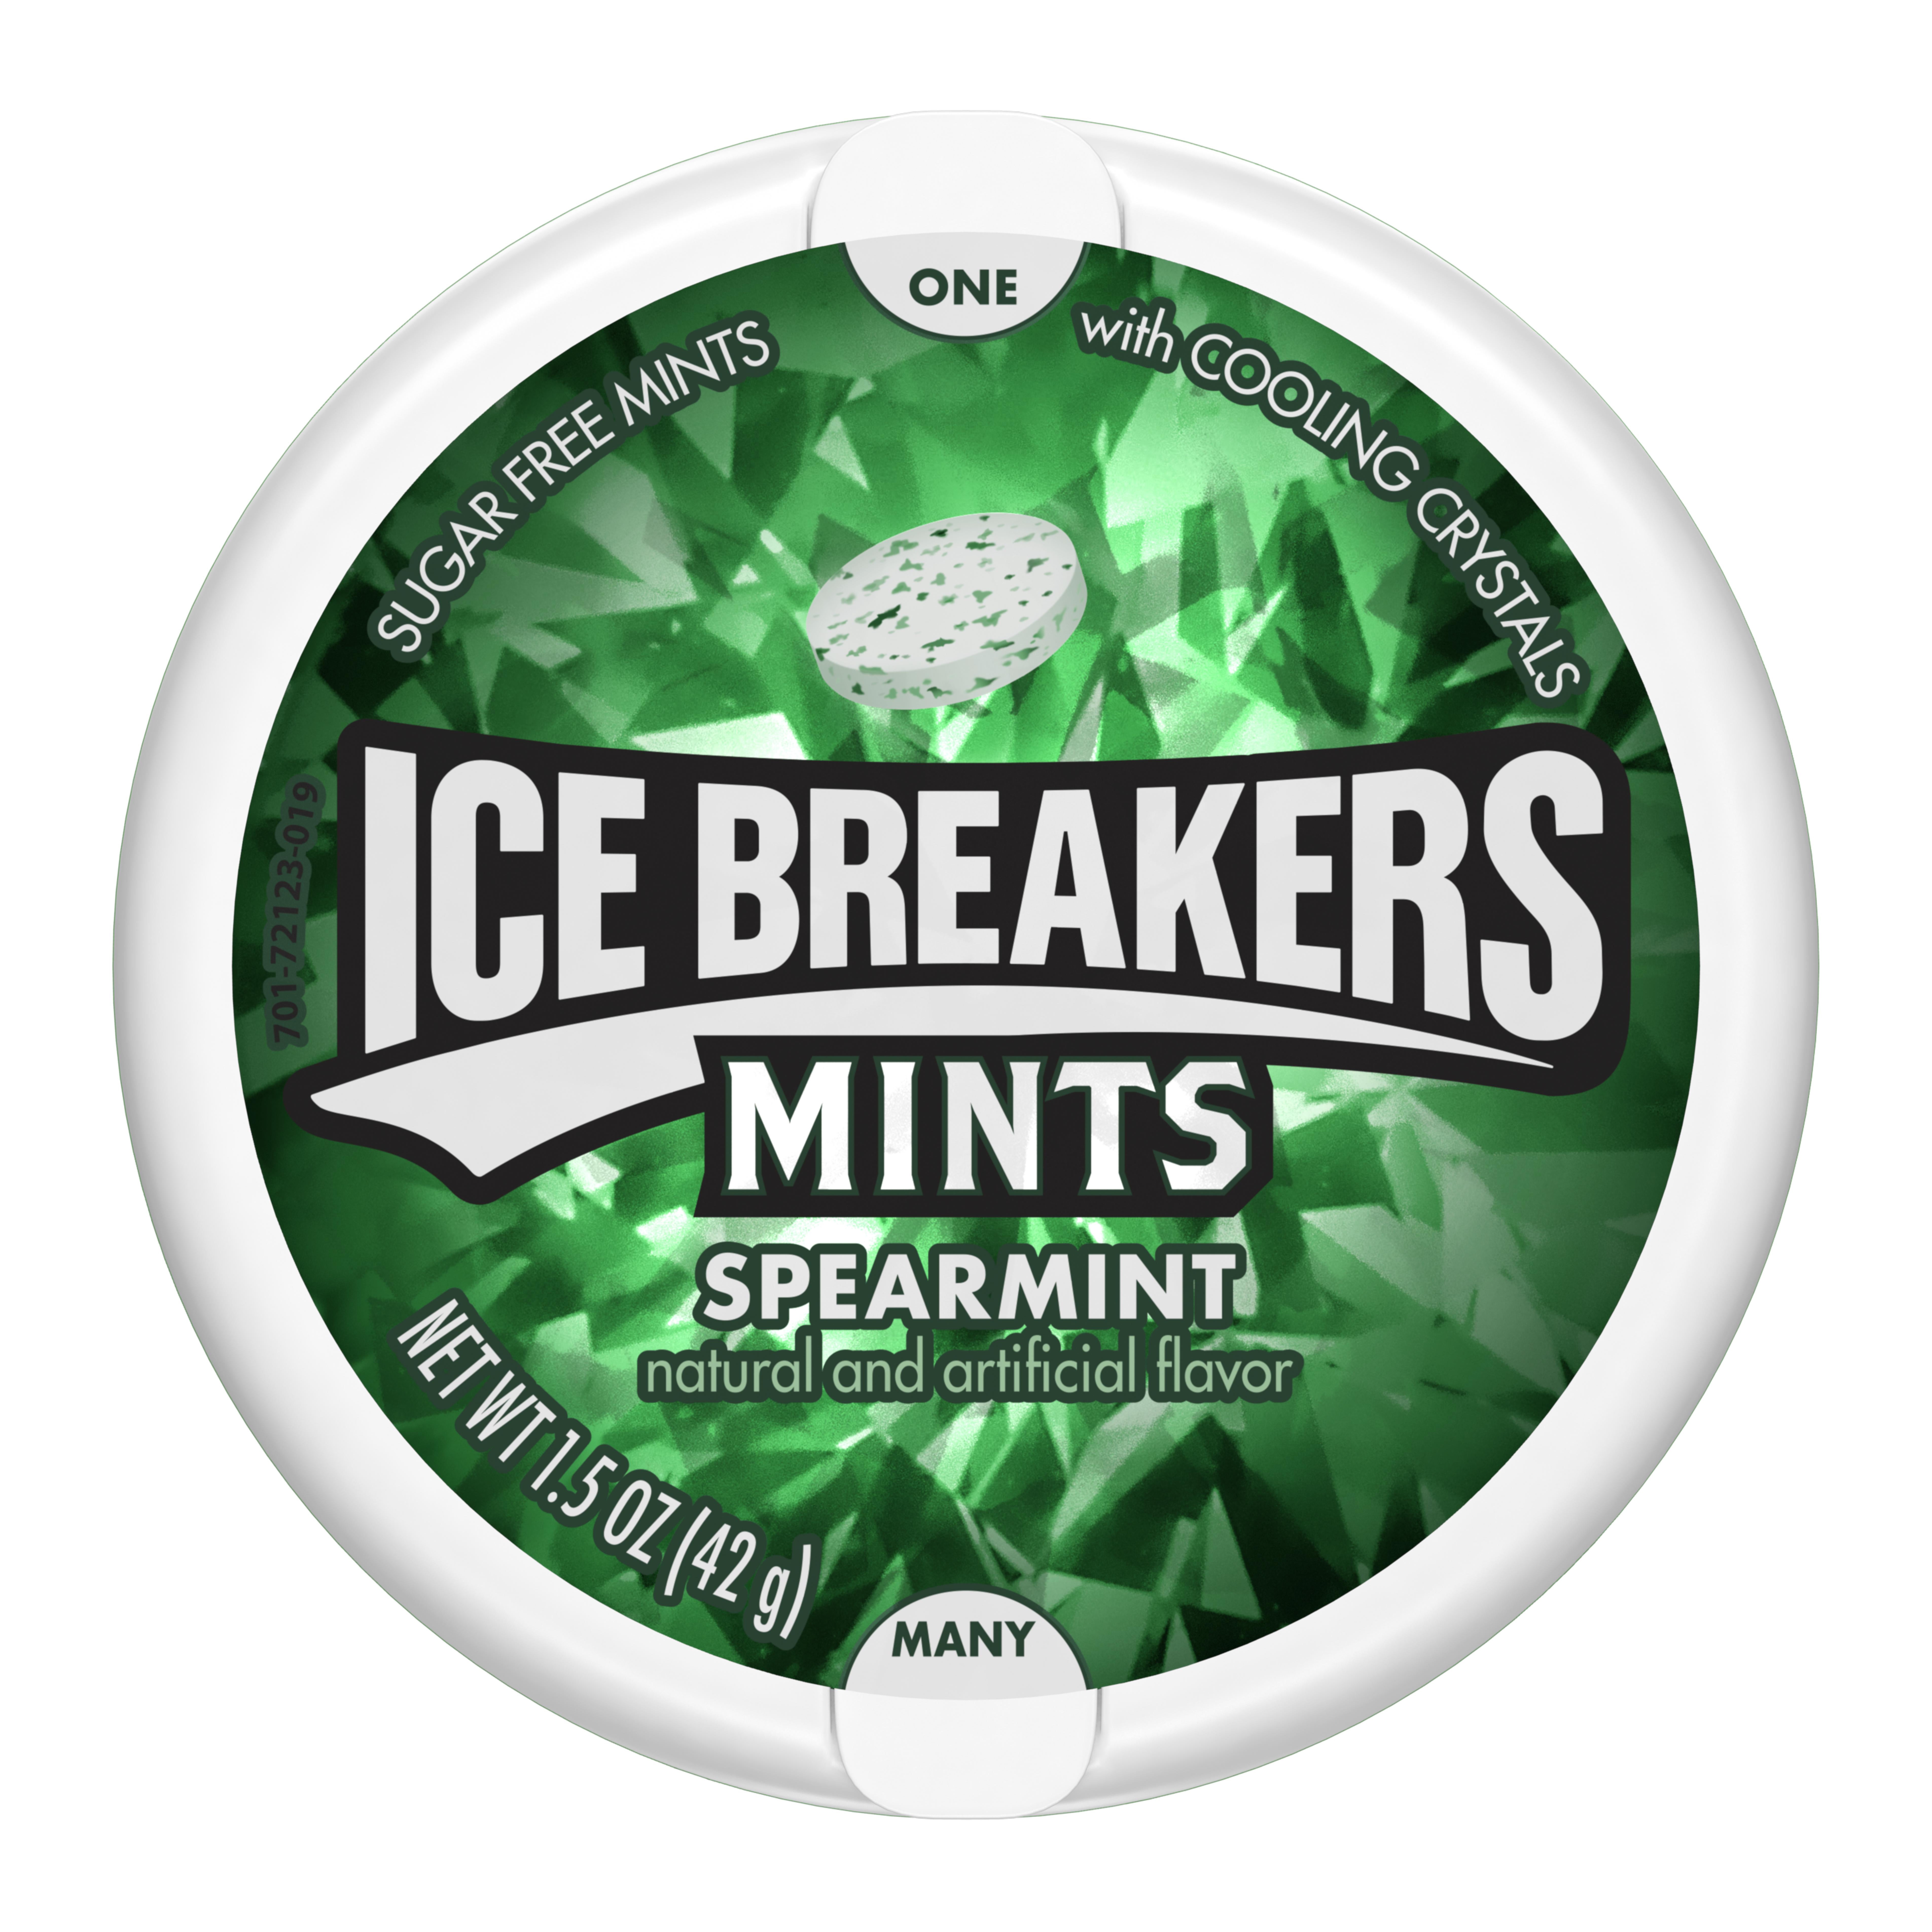 Icebreaker Sugar Free, Spearmint Mints, 1.5 oz